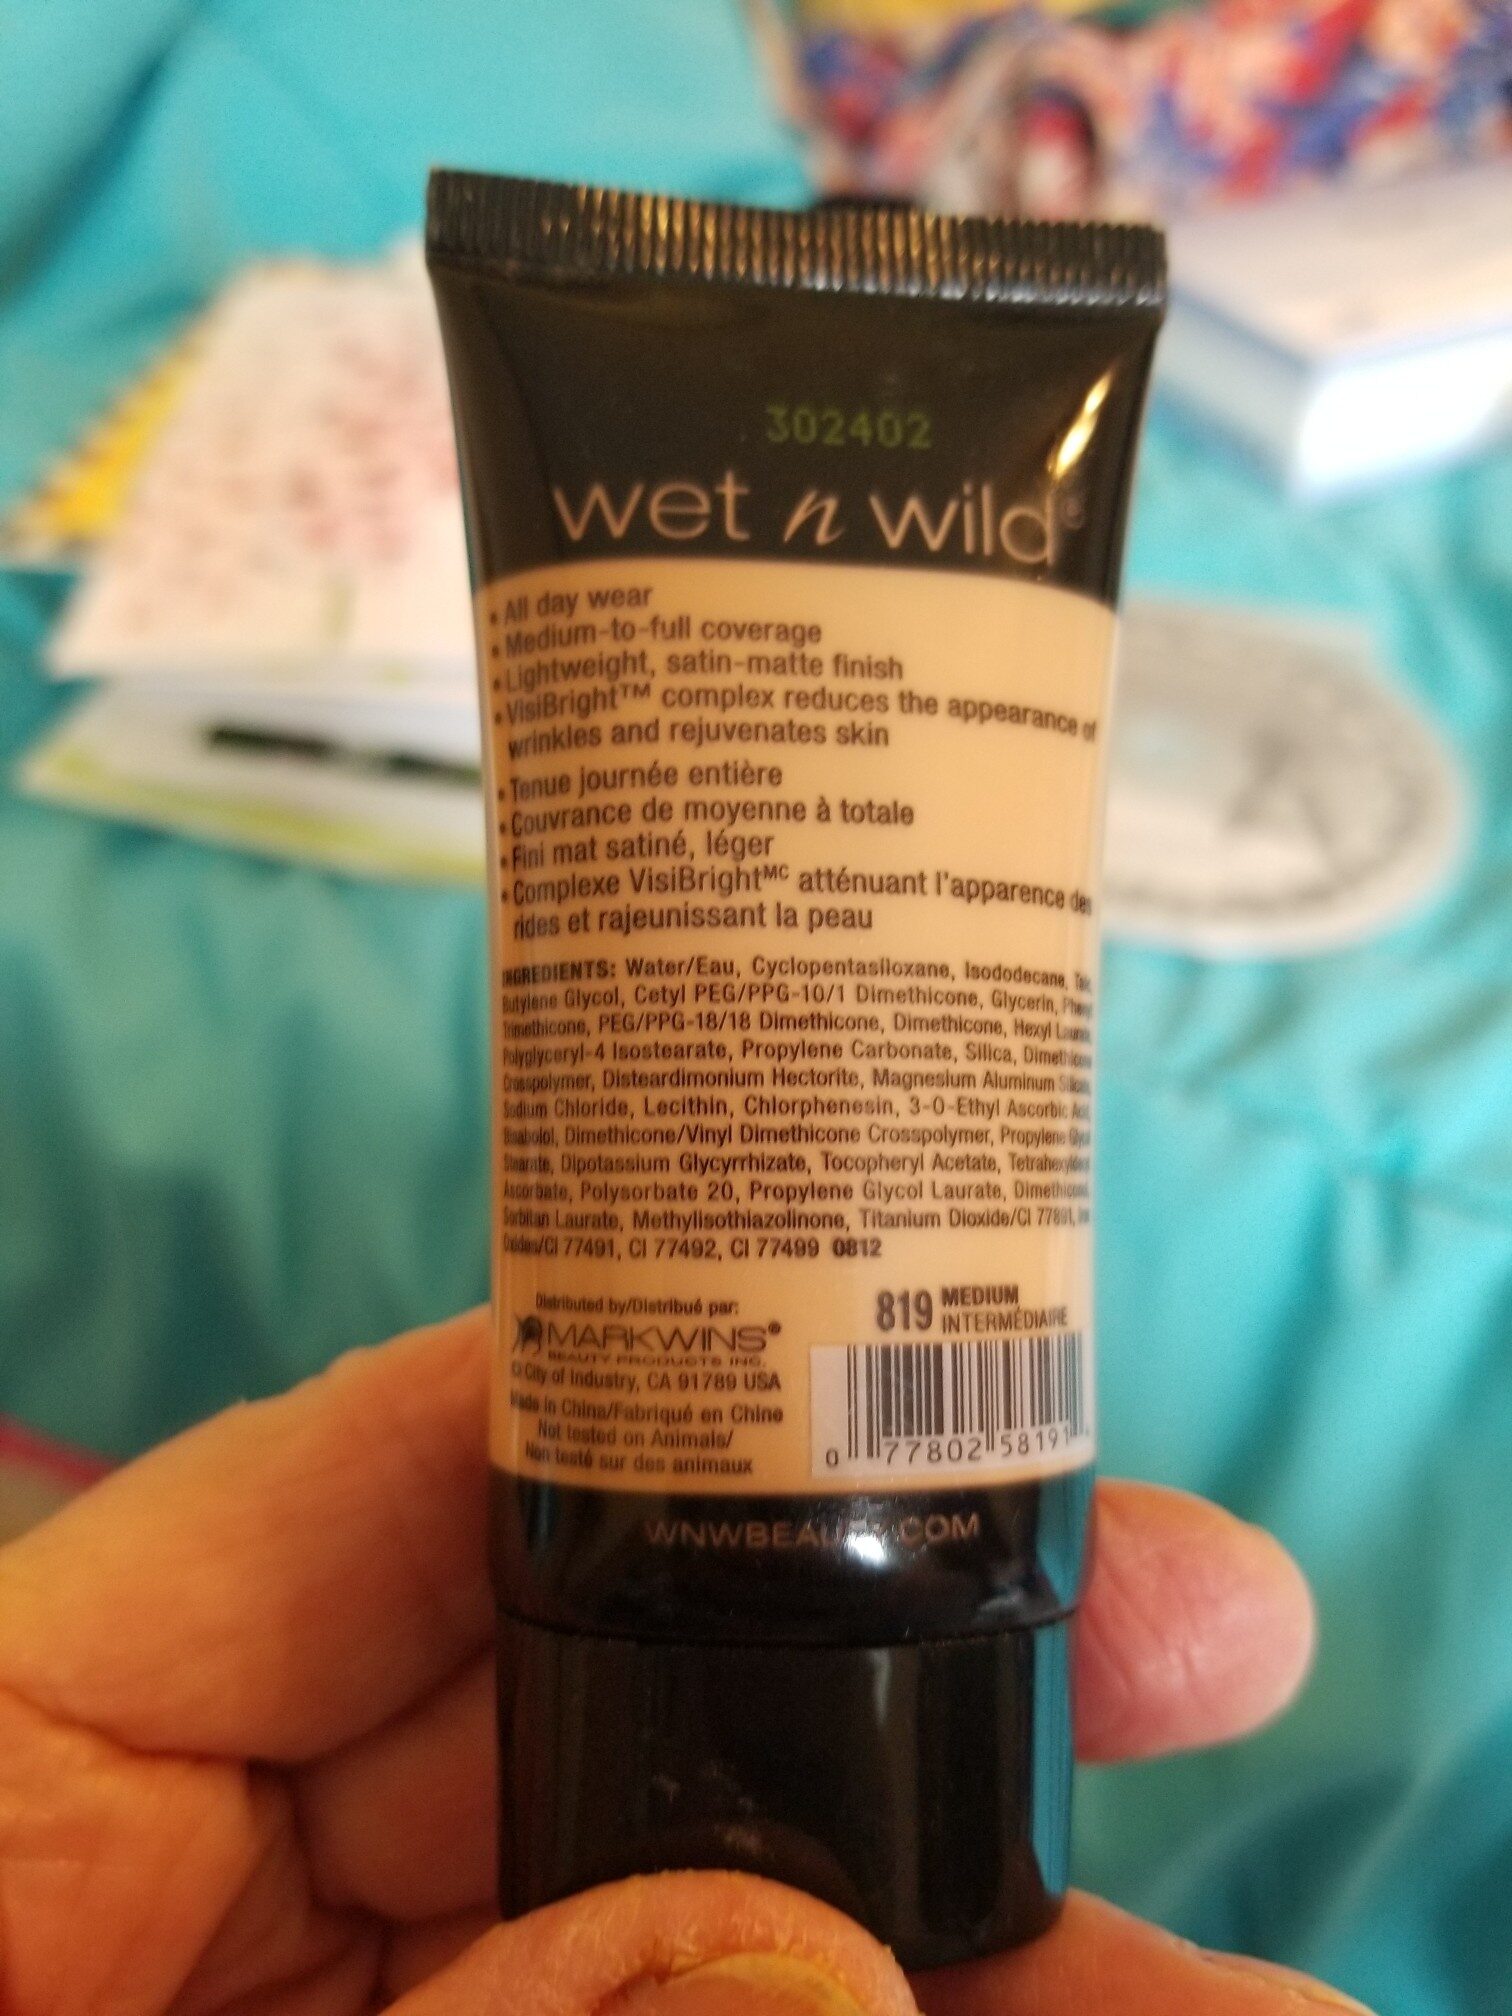 wet n wild - Product